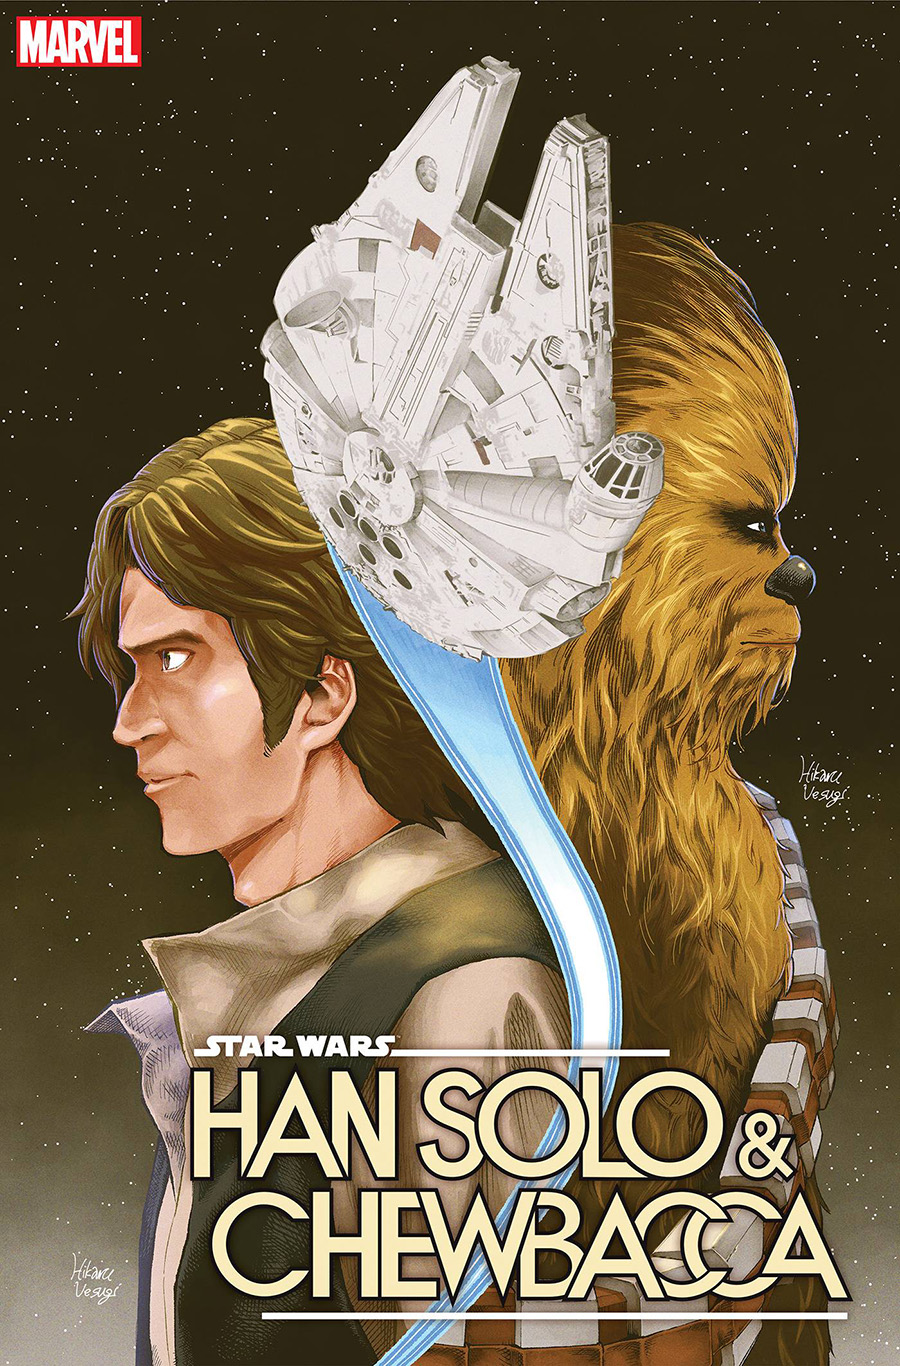 Star Wars Han Solo & Chewbacca #3 Cover B Variant Hikaru Uesugi Japanese Creator Cover